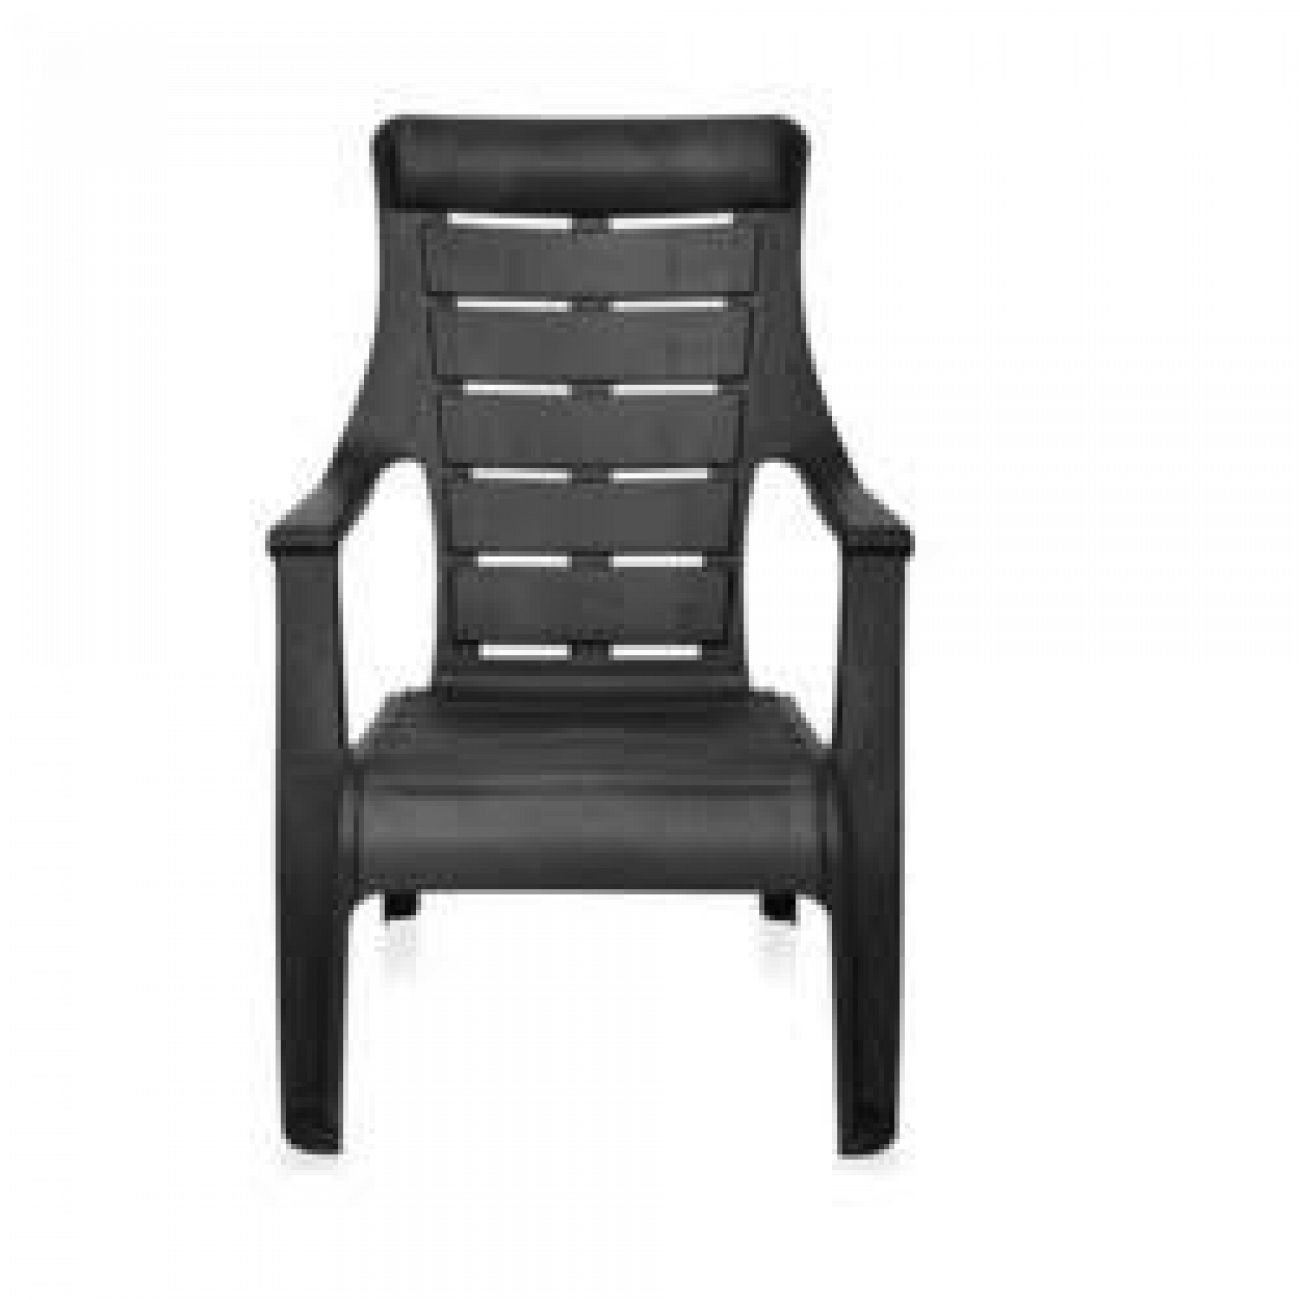 Comfort designer chair